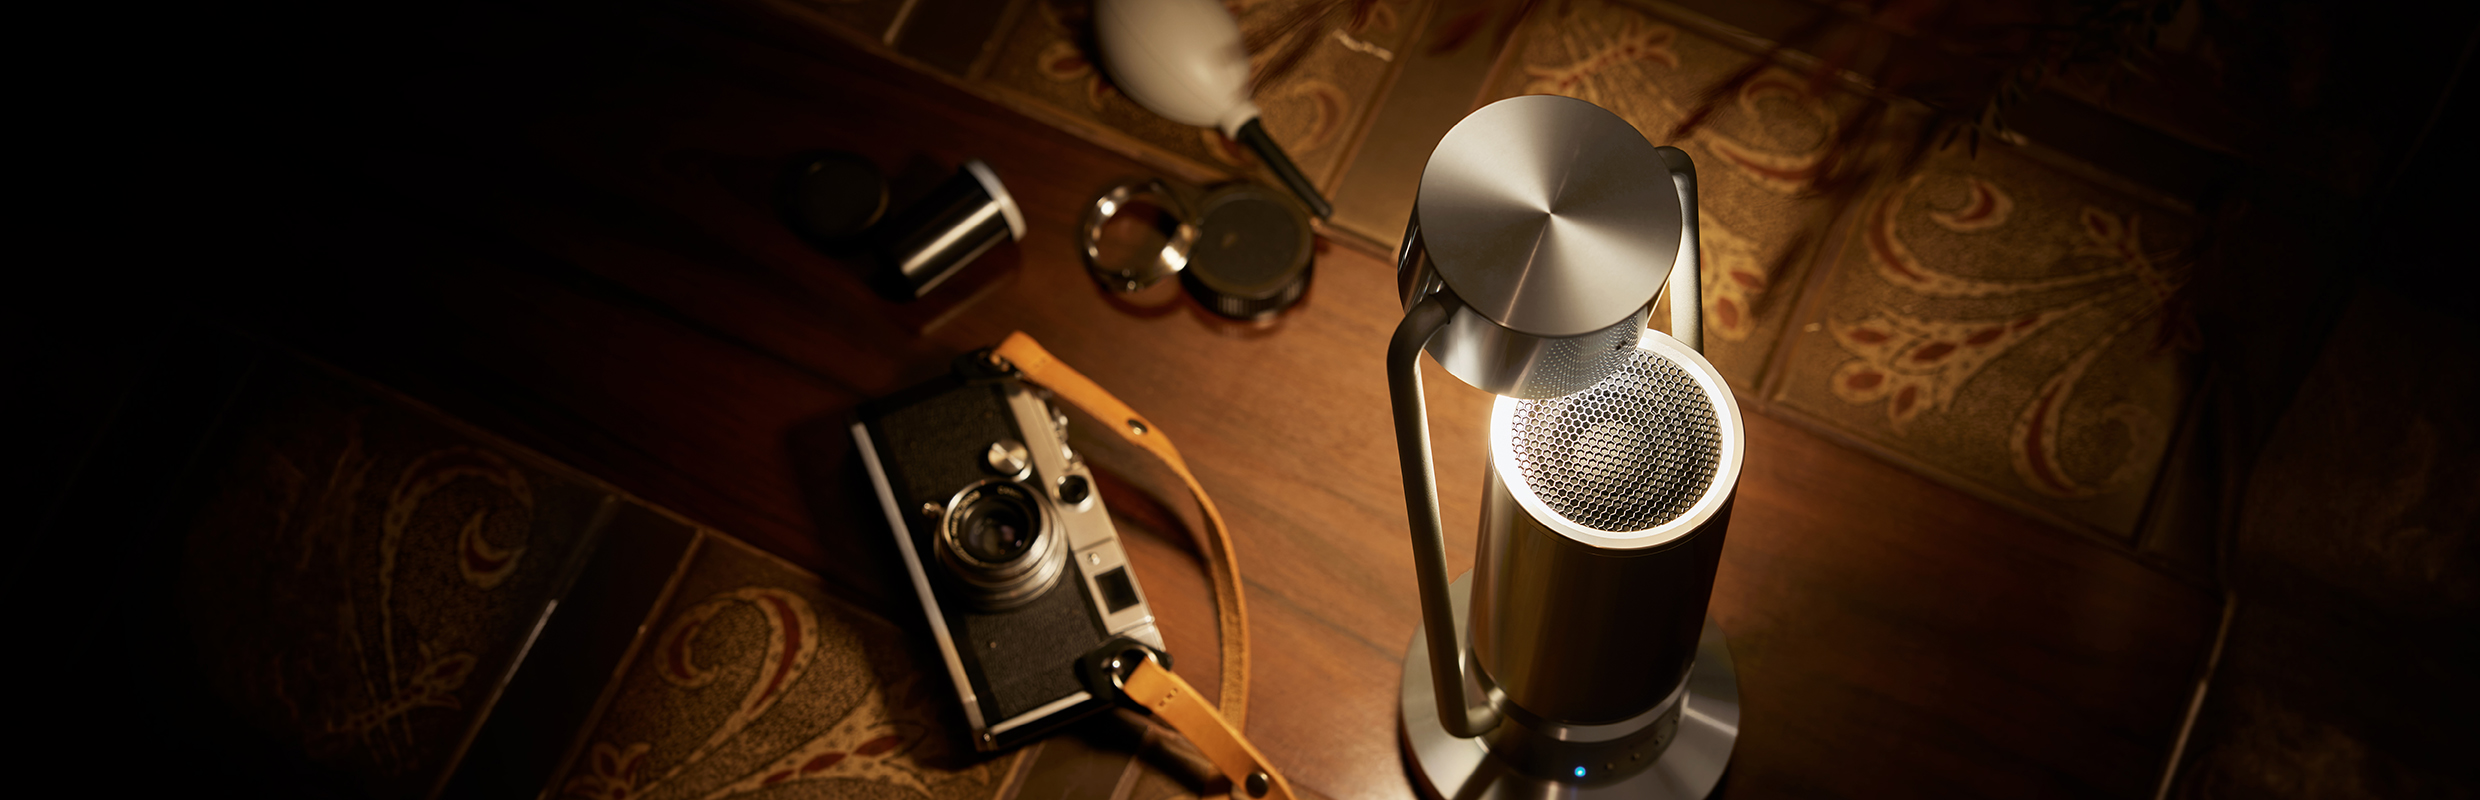 albos Light ＆ Speaker ML-A（SL） Canon-